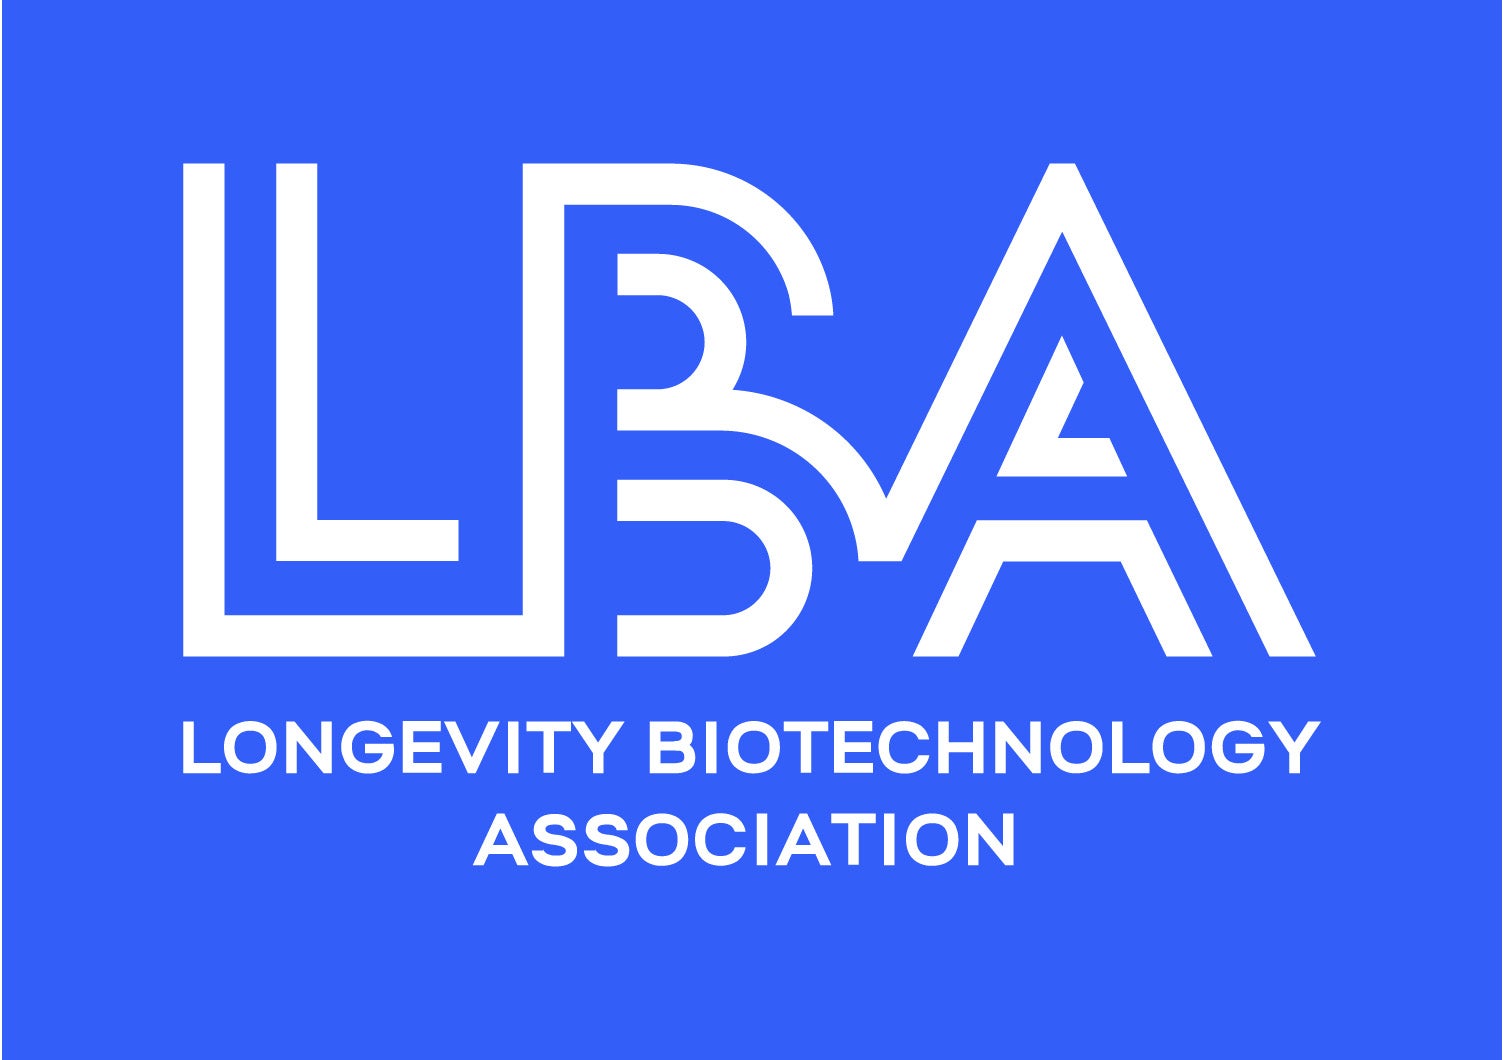 Longevity Biotechnology Association